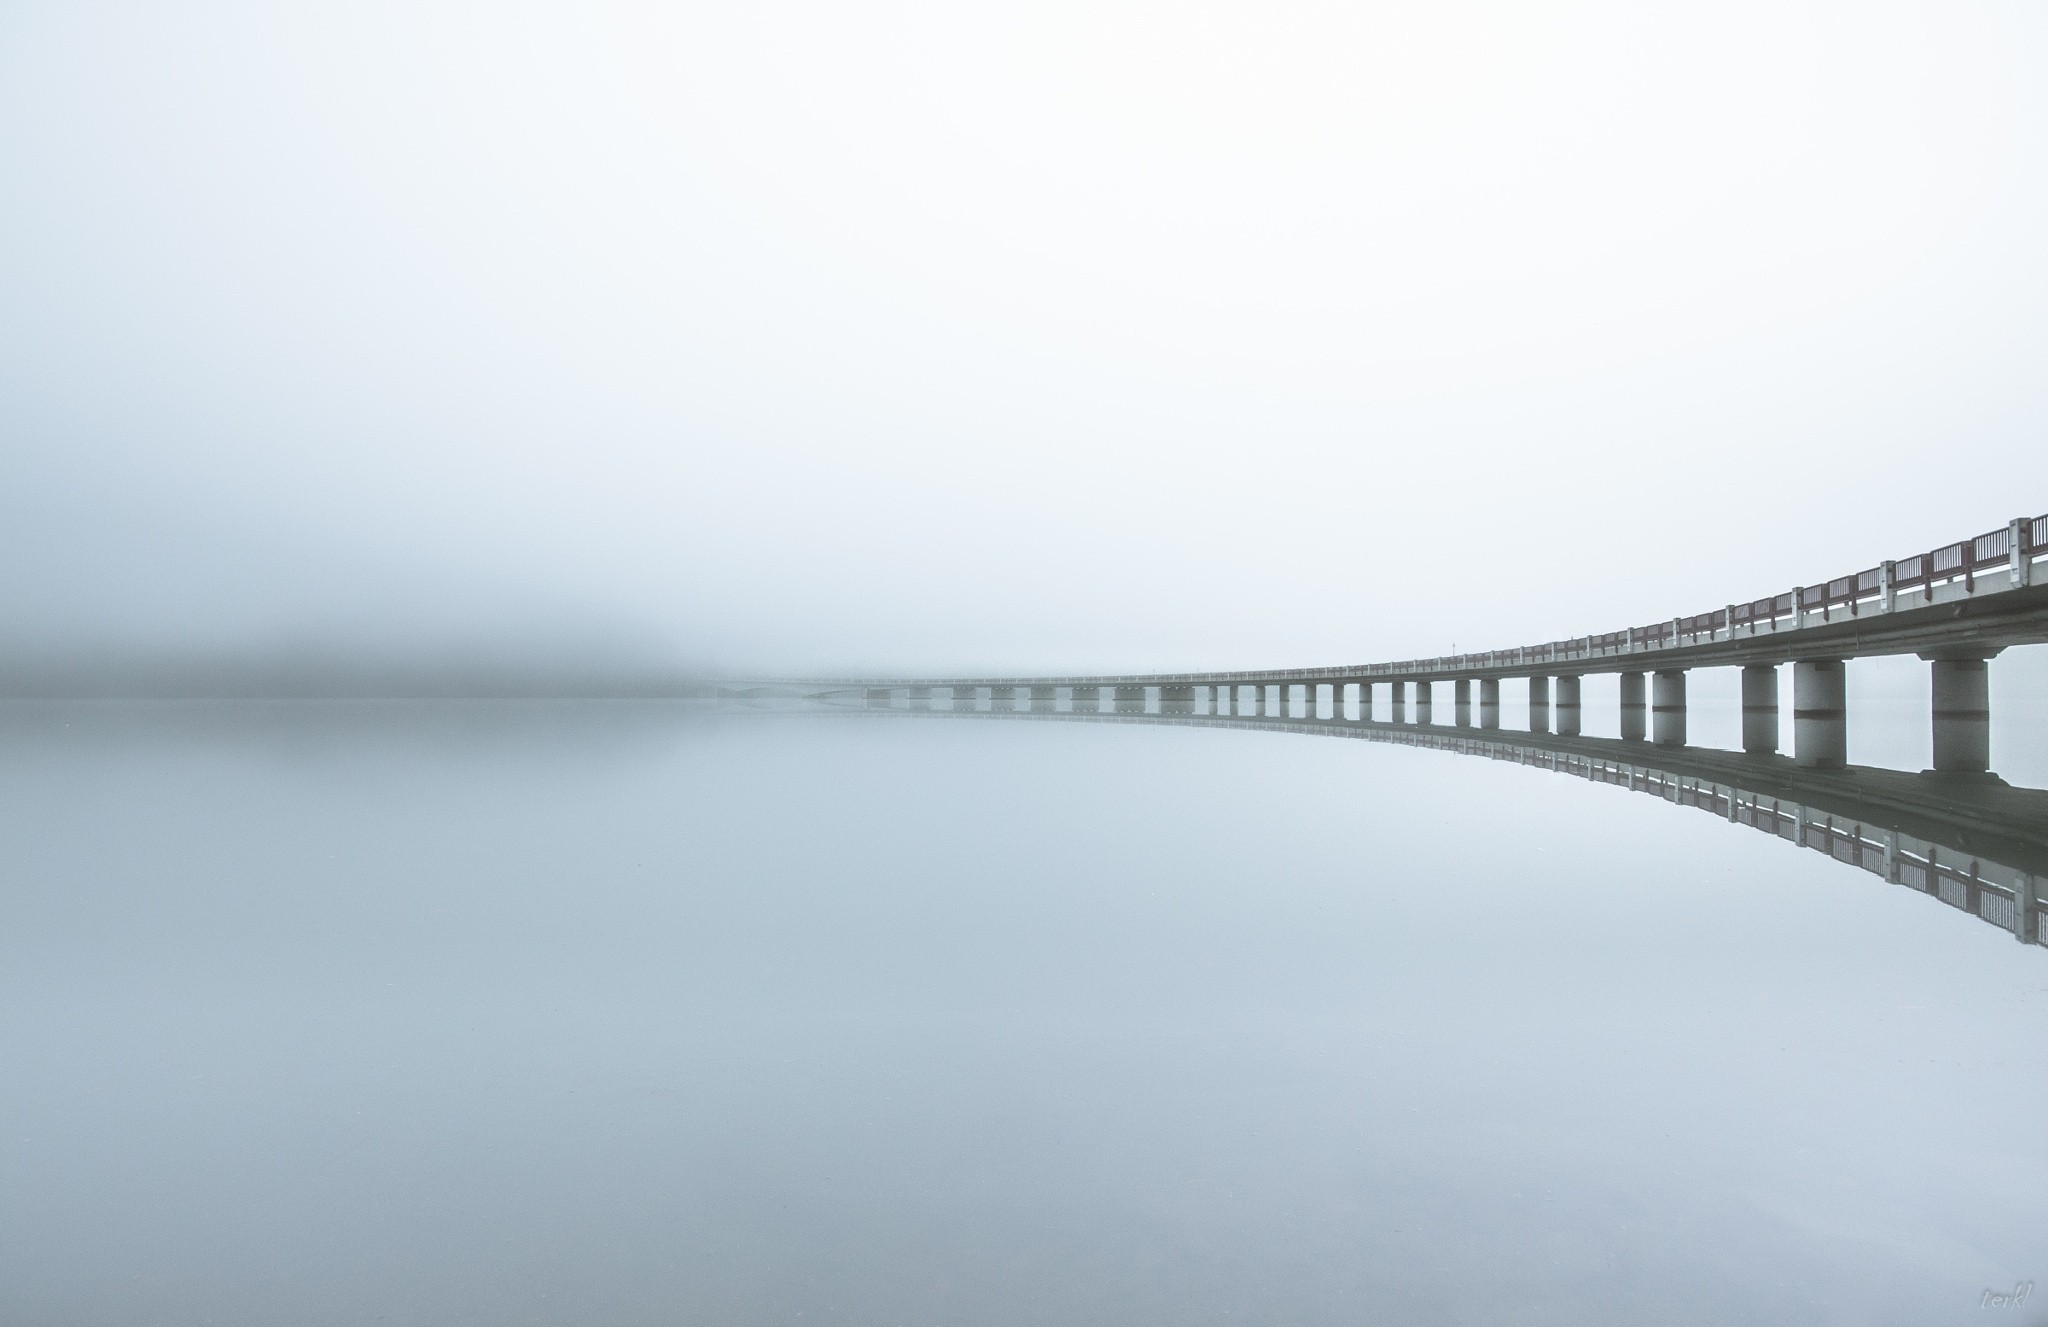 General 2048x1327 minimalism mist bridge lake reflection calm waters white outdoors